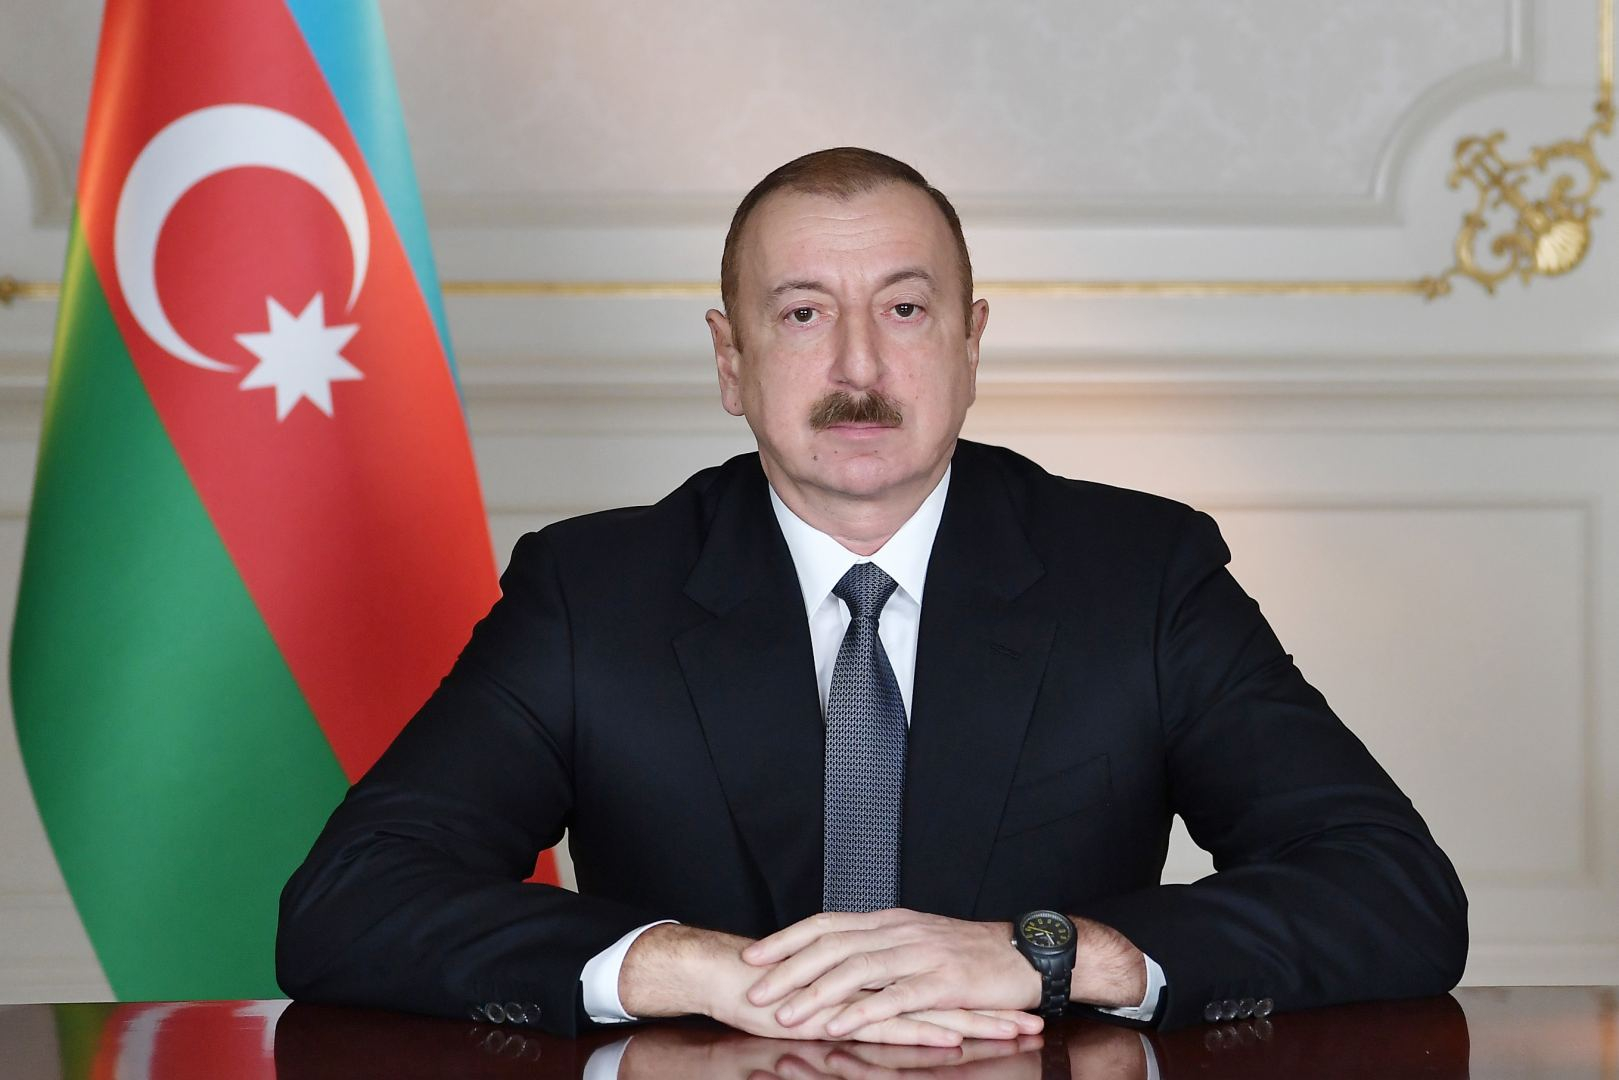 Ильхам Алиев поздравил Милоша Земана